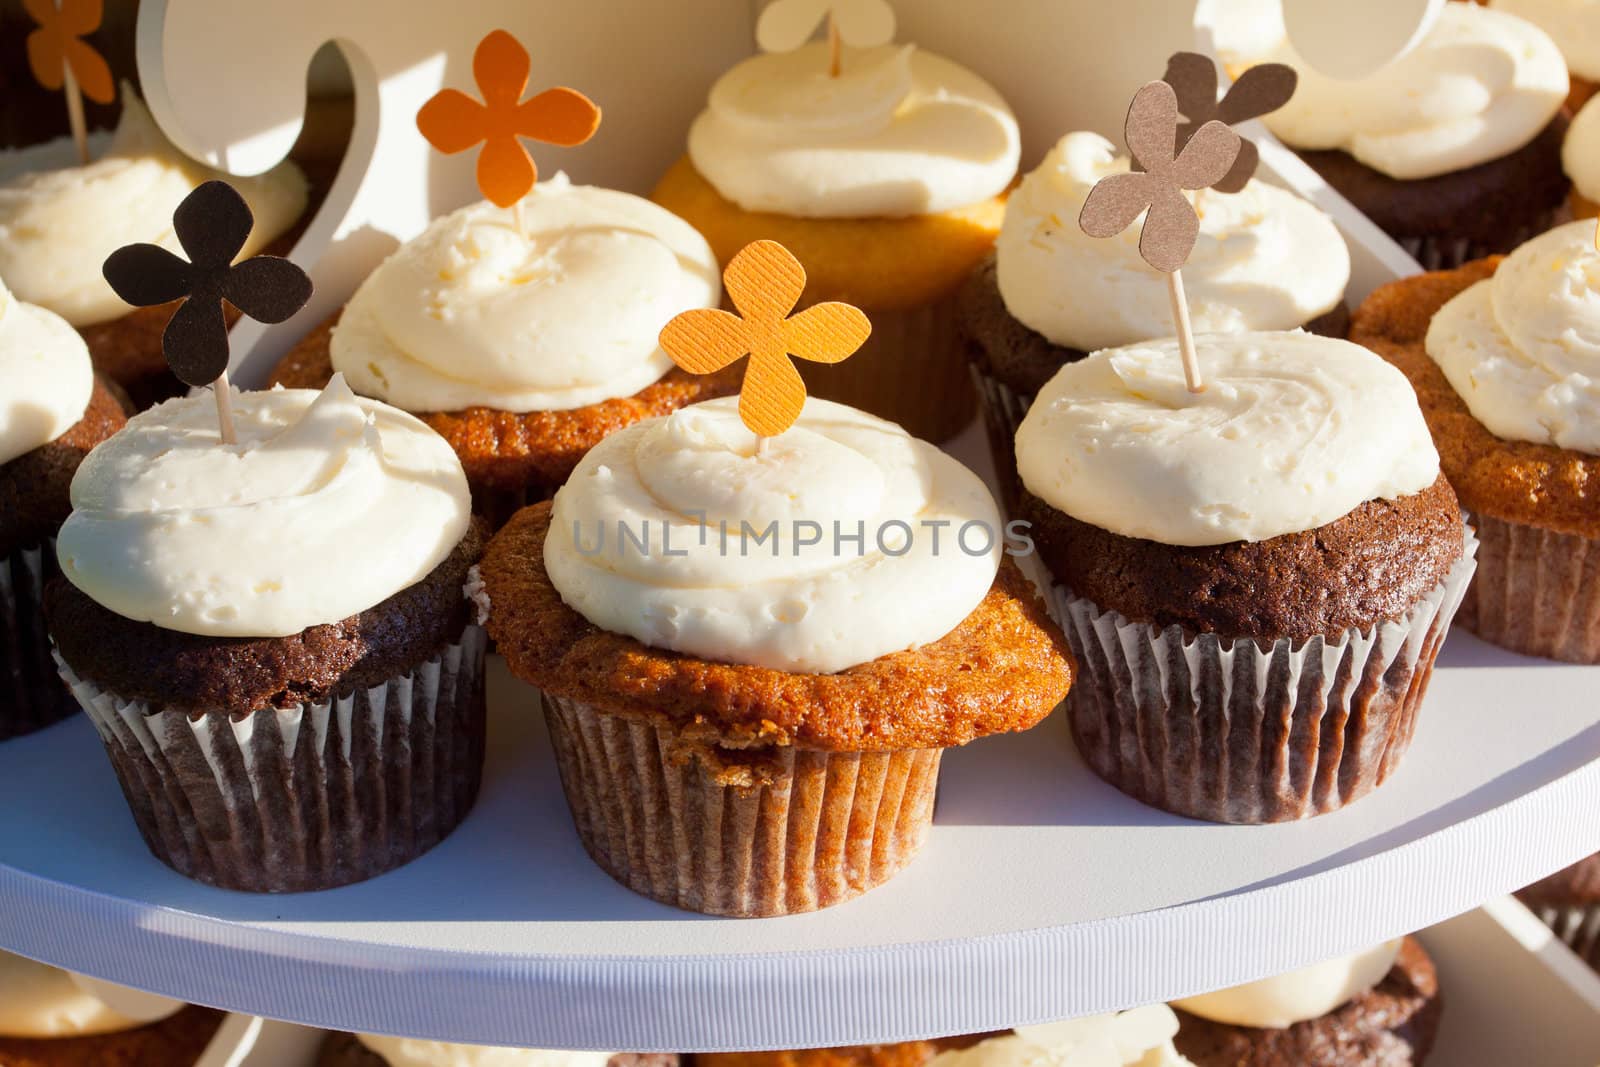 Wedding cupcakes of chocolate, vanilla, and carrotcake at a wedding reception.